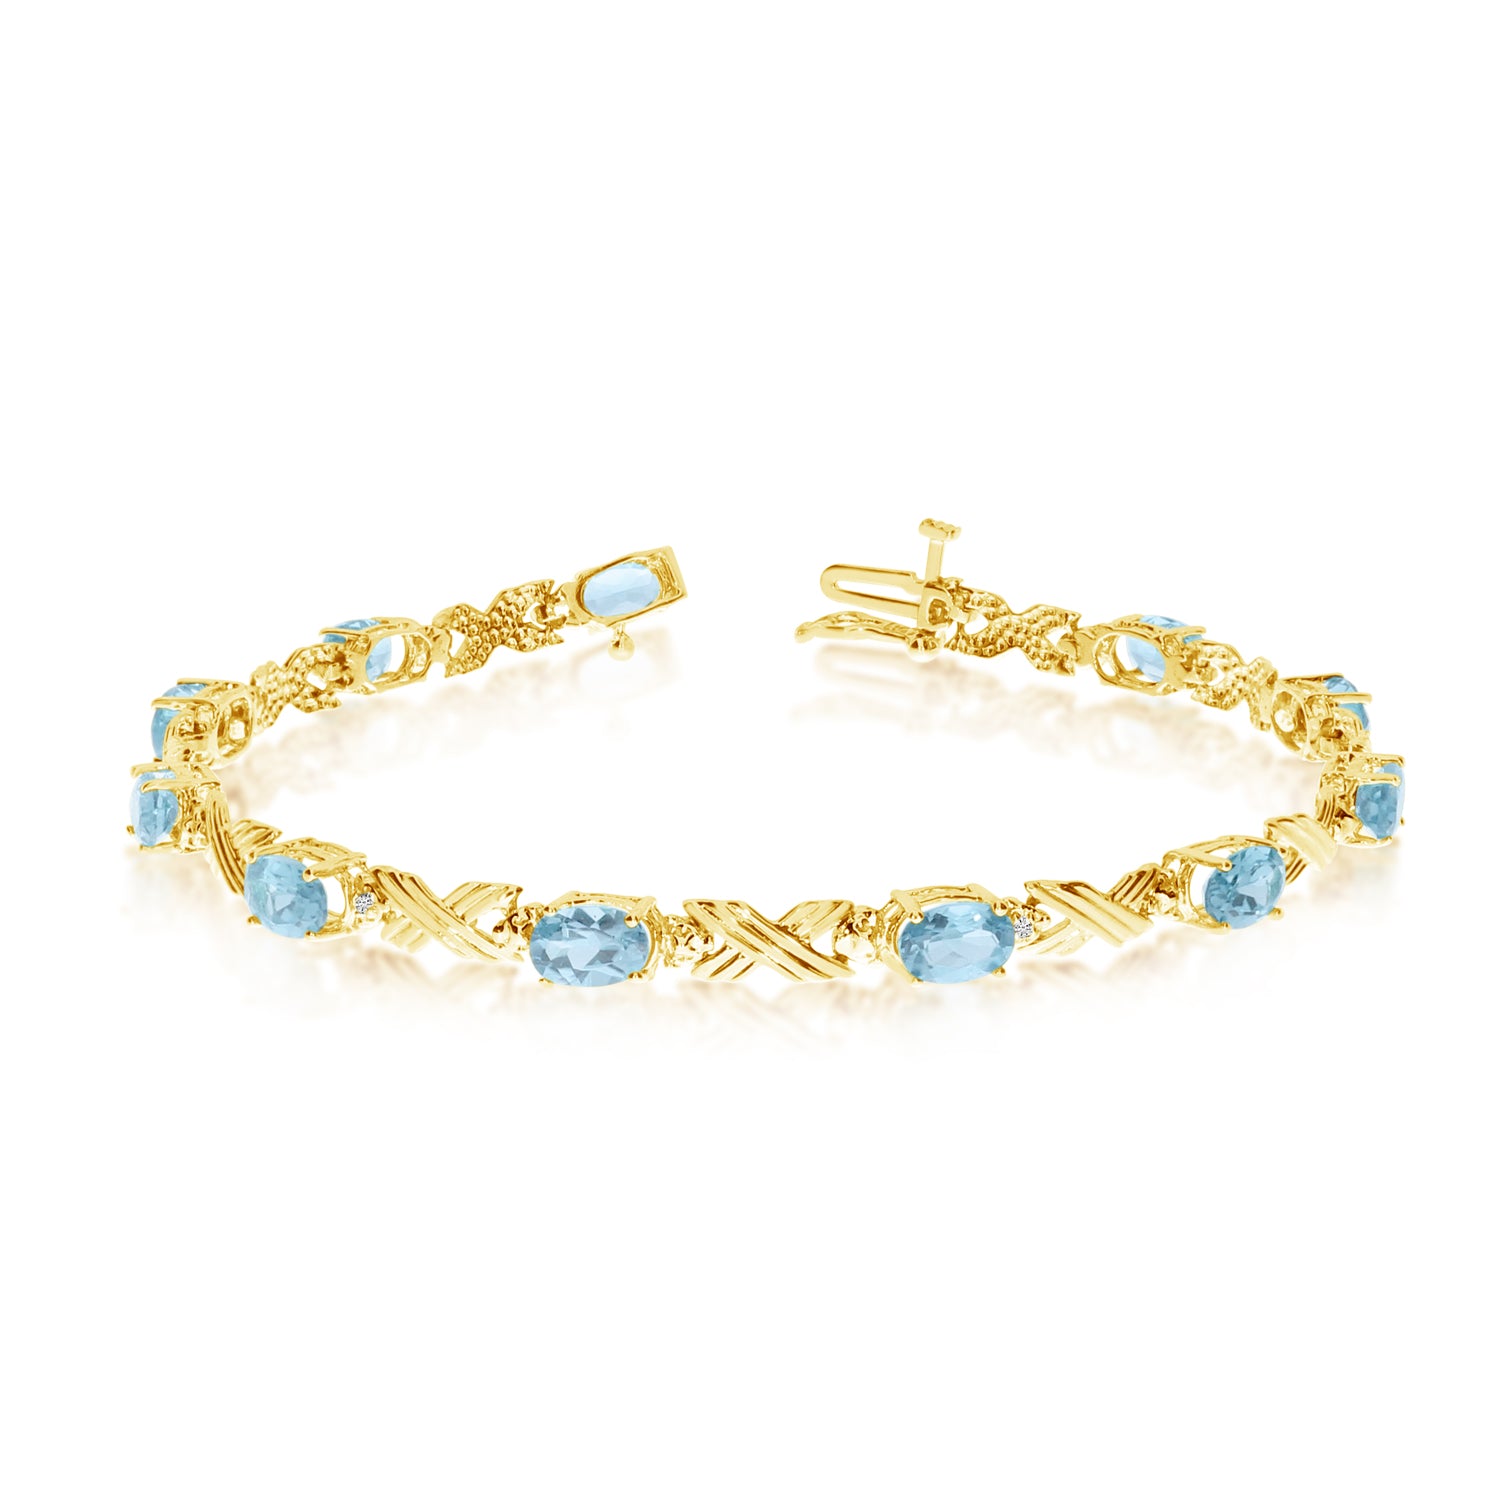 10K Yellow Gold Oval Aquamarine Stones And Diamonds Tennis Bracelet, 7"